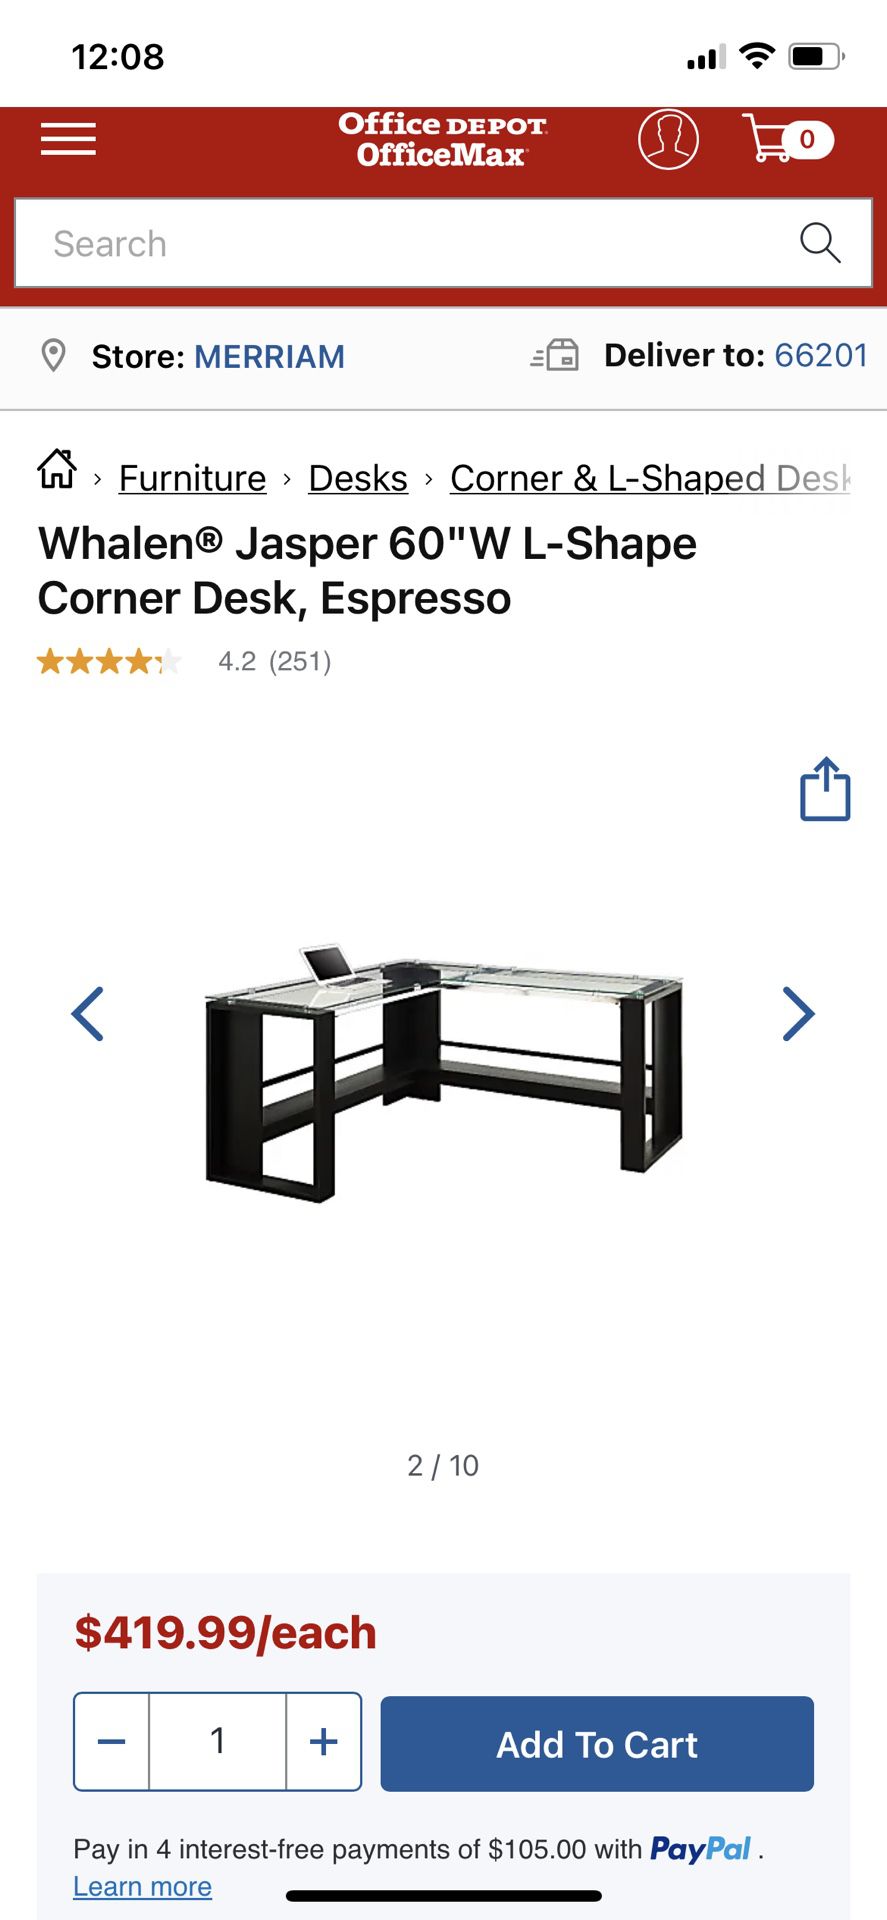 Whalen® Jasper 60"W L-Shape Corner Desk